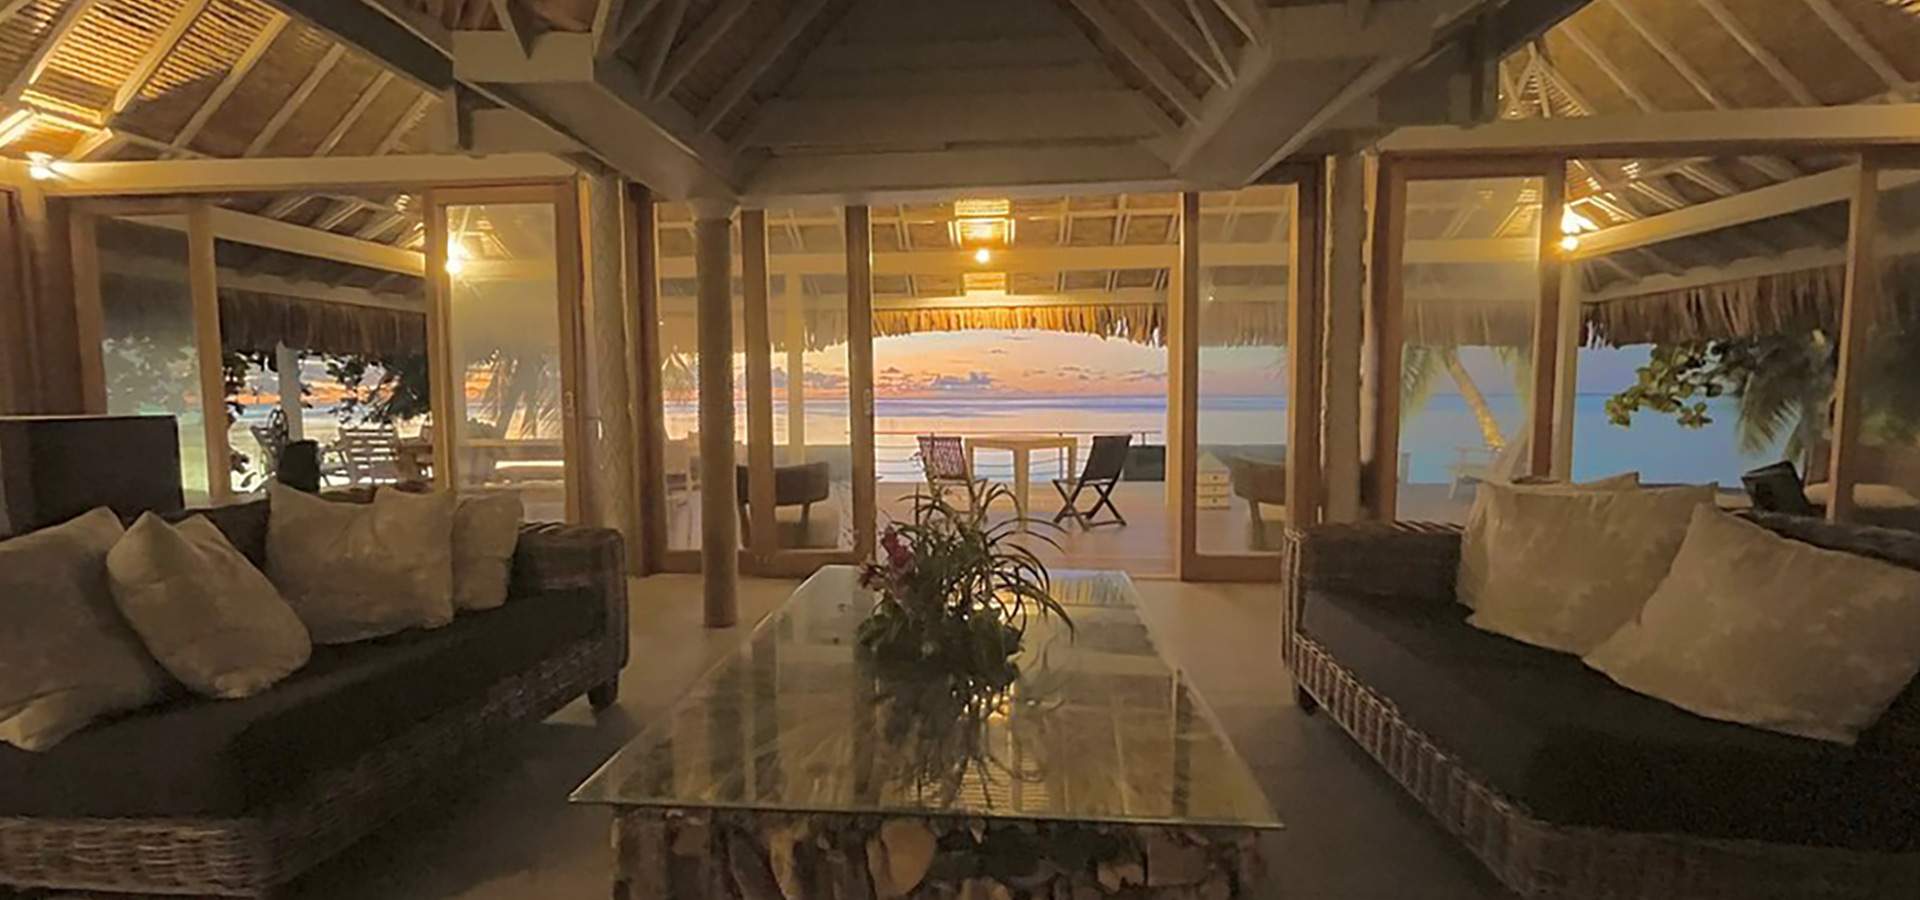 Moorea Island Beach Hotel interior lounge